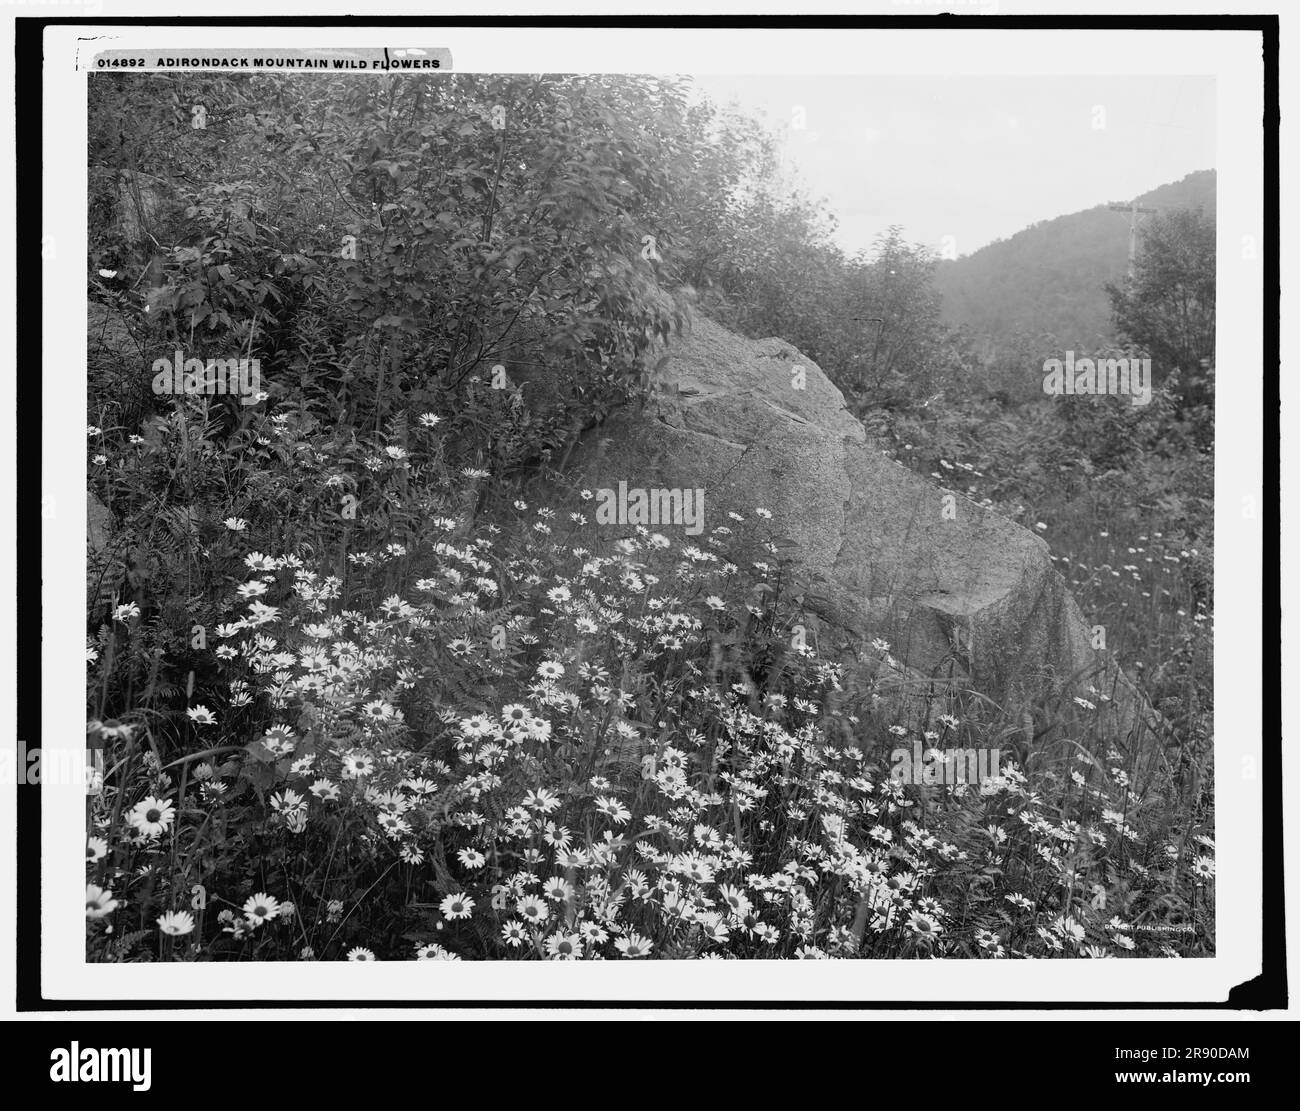 Adirondack mountain wildflowers, (1902?). Stock Photo